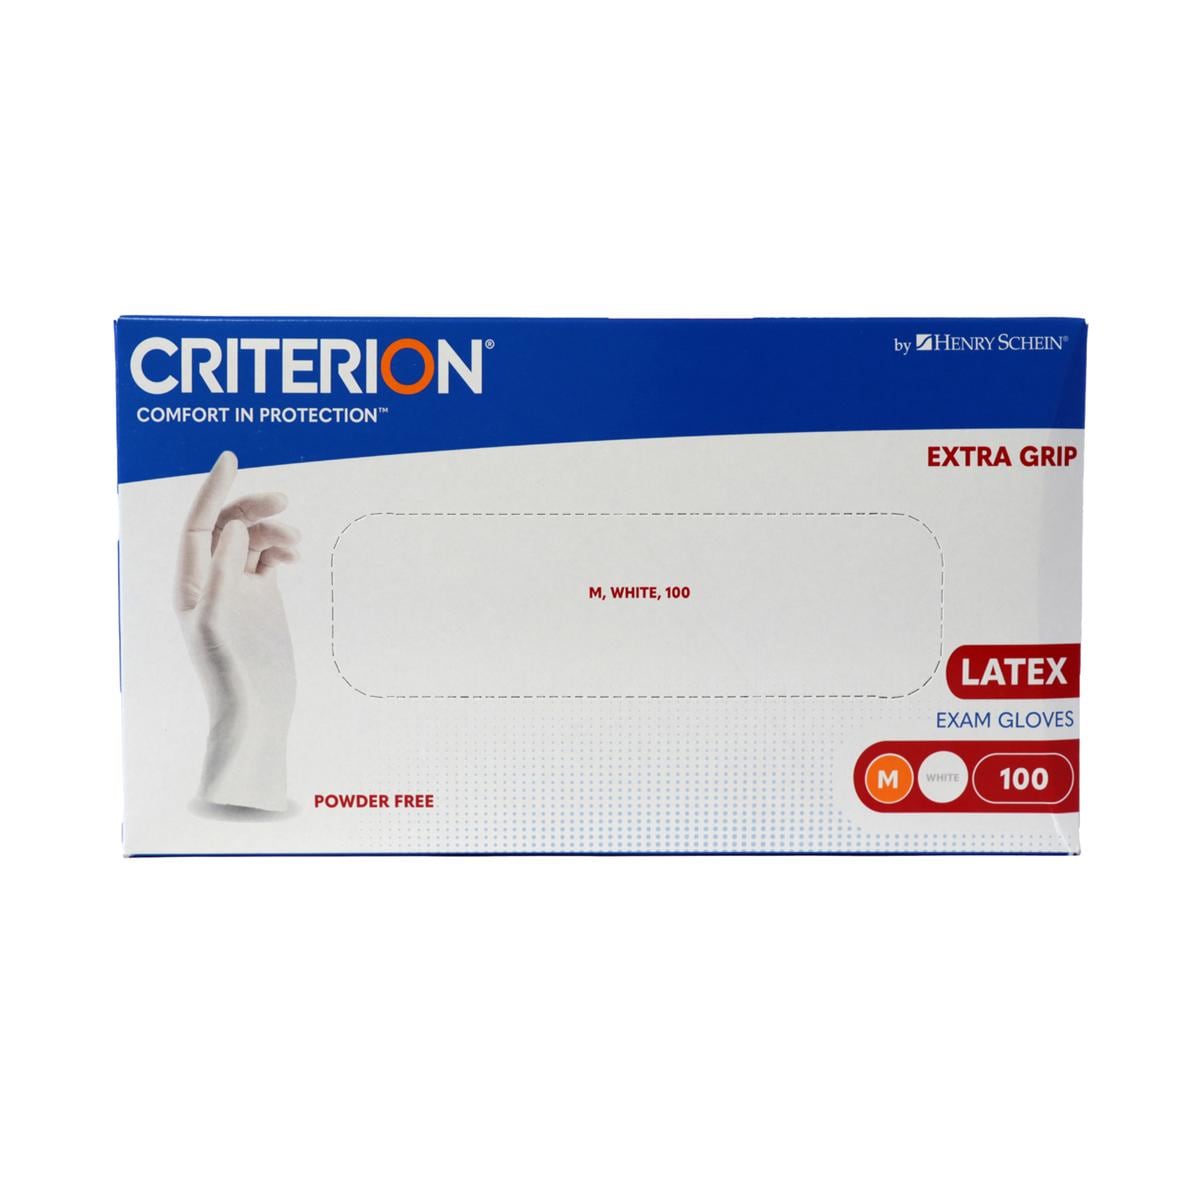 Criterion Latex Exam Extra Grip PF Gloves - M